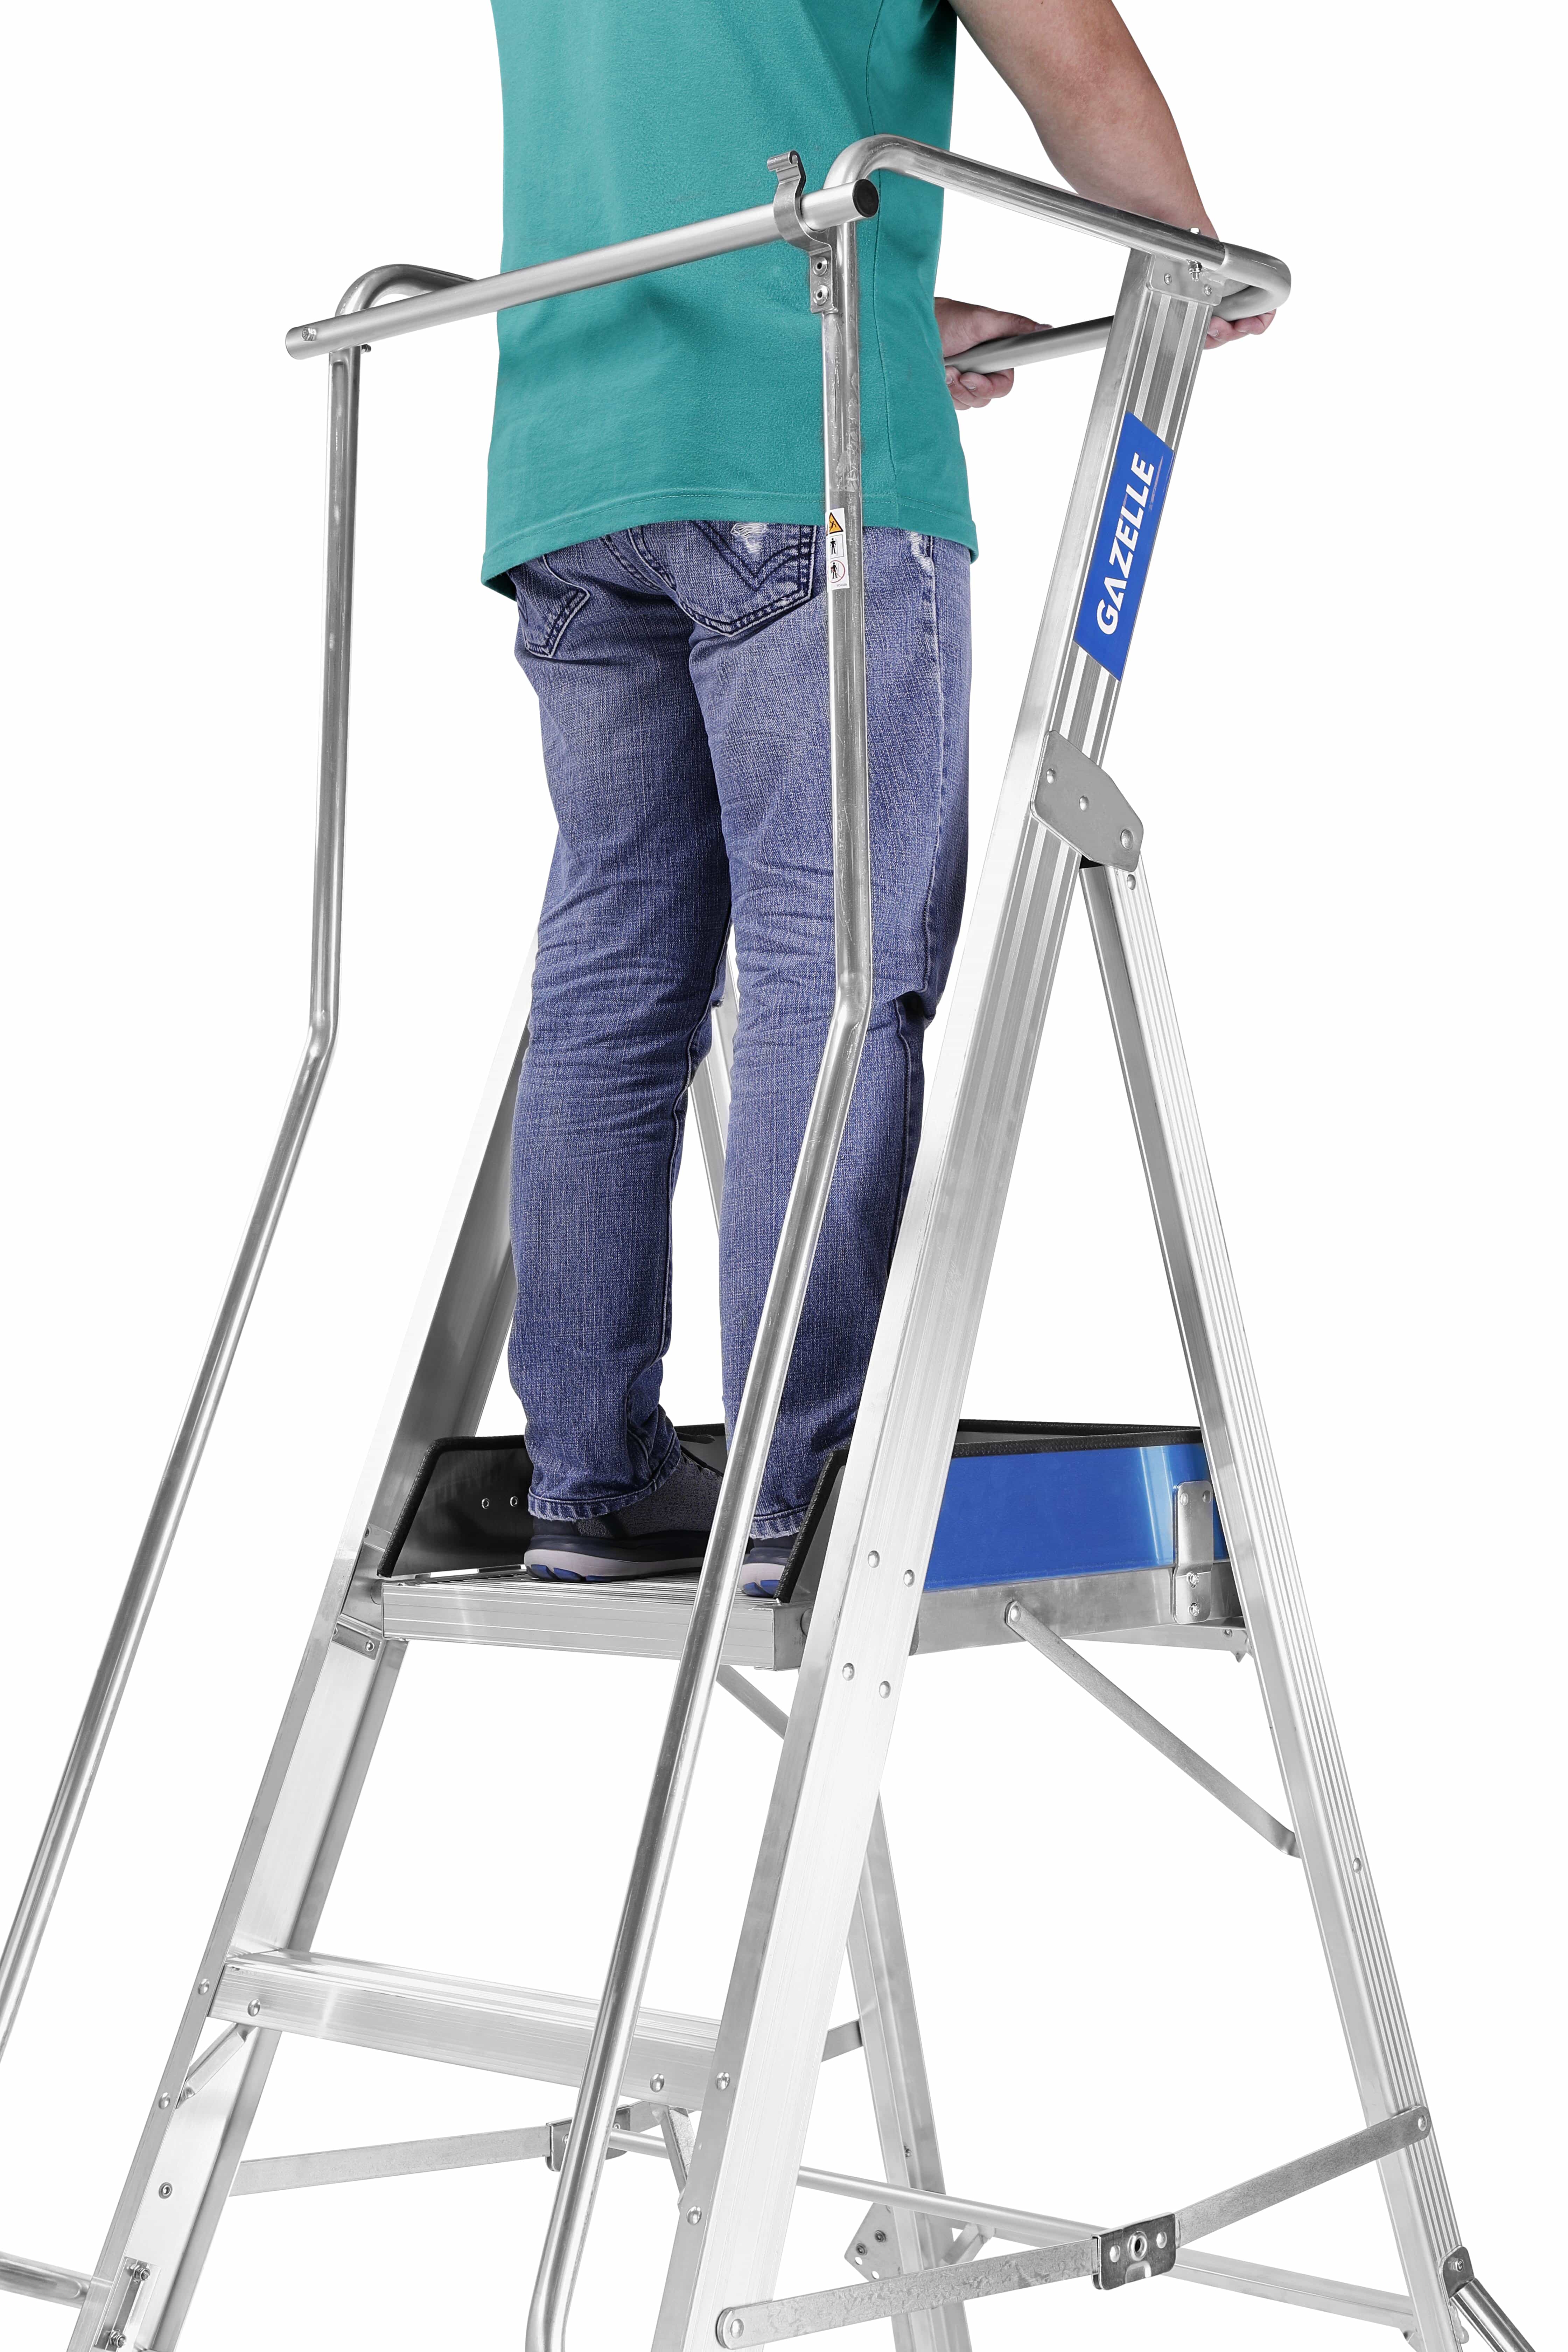 GAZELLE_G5800_Platform Ladder_Top - 6 Step Aluminium Platform Ladder for working height up to 12 Ft.